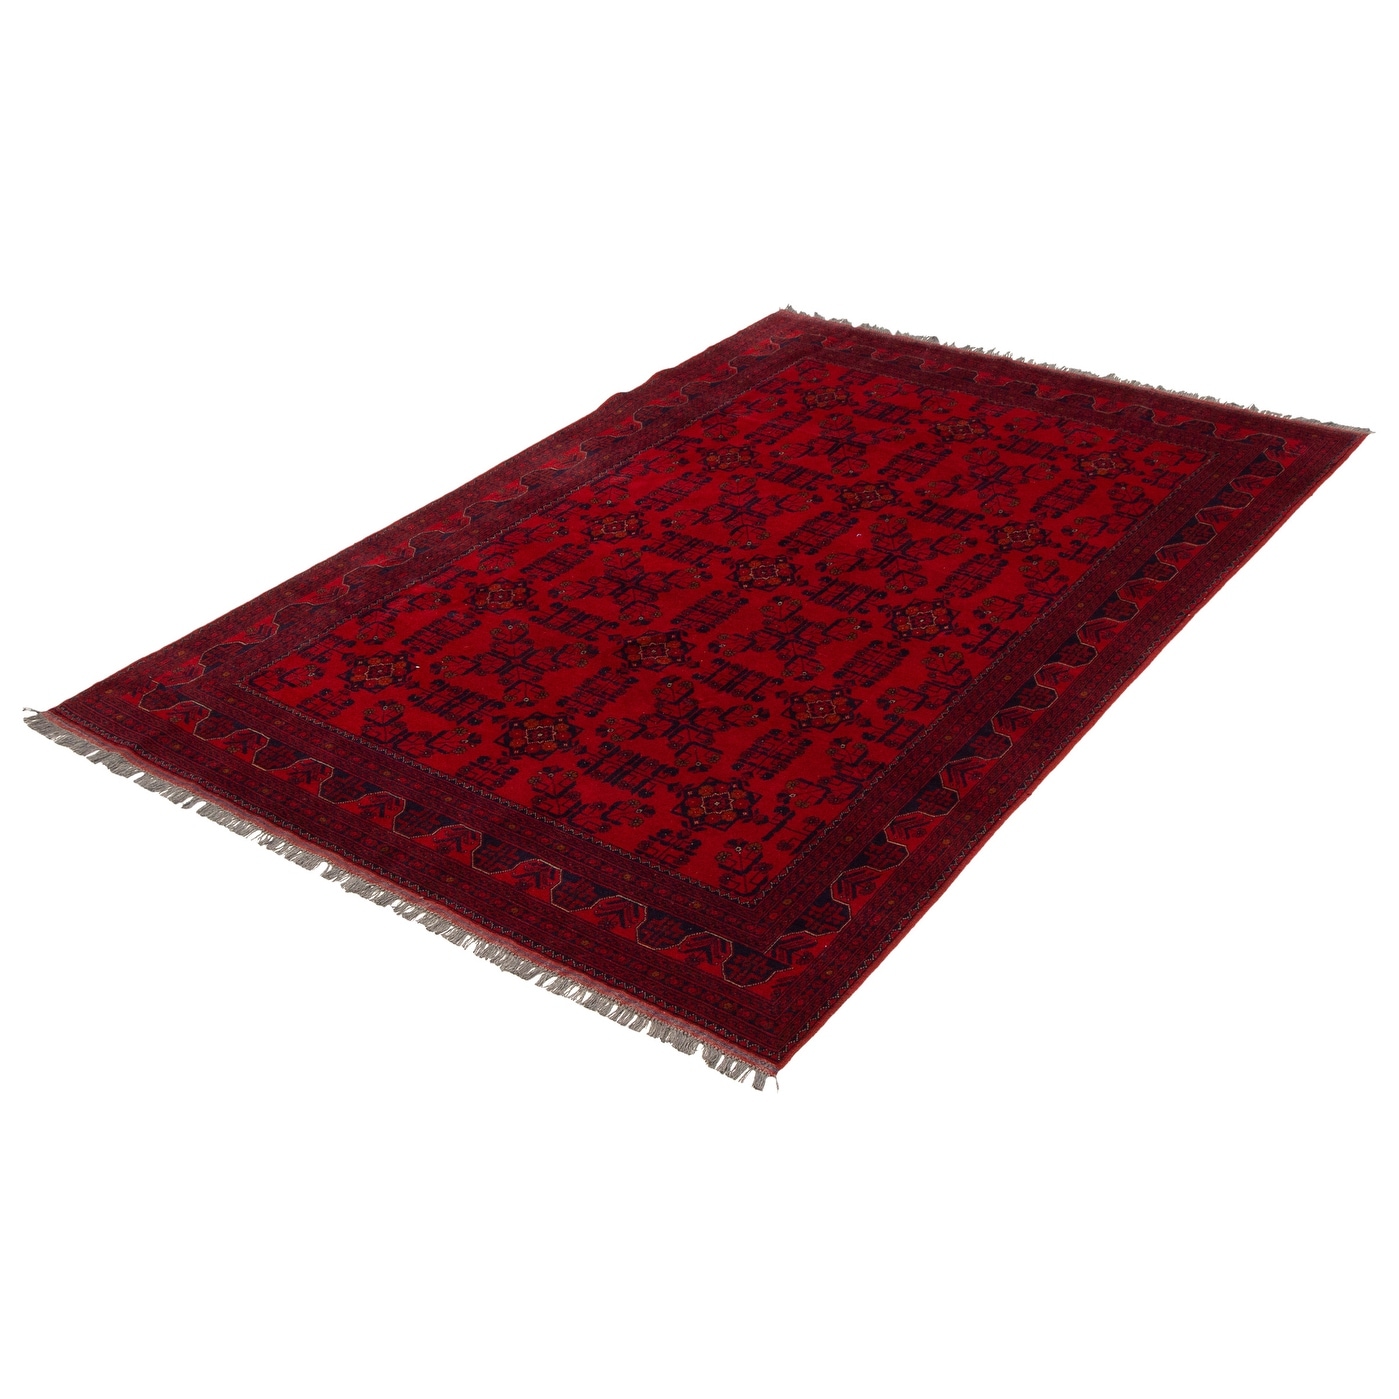 Finest Khal Mohammadi Bordered Red Rug 2'10 x 9'8 eCarpet Gallery Runner Rug for Hallway 342278 Entrance Kitchen Hand-Knotted Wool Runner Rug 